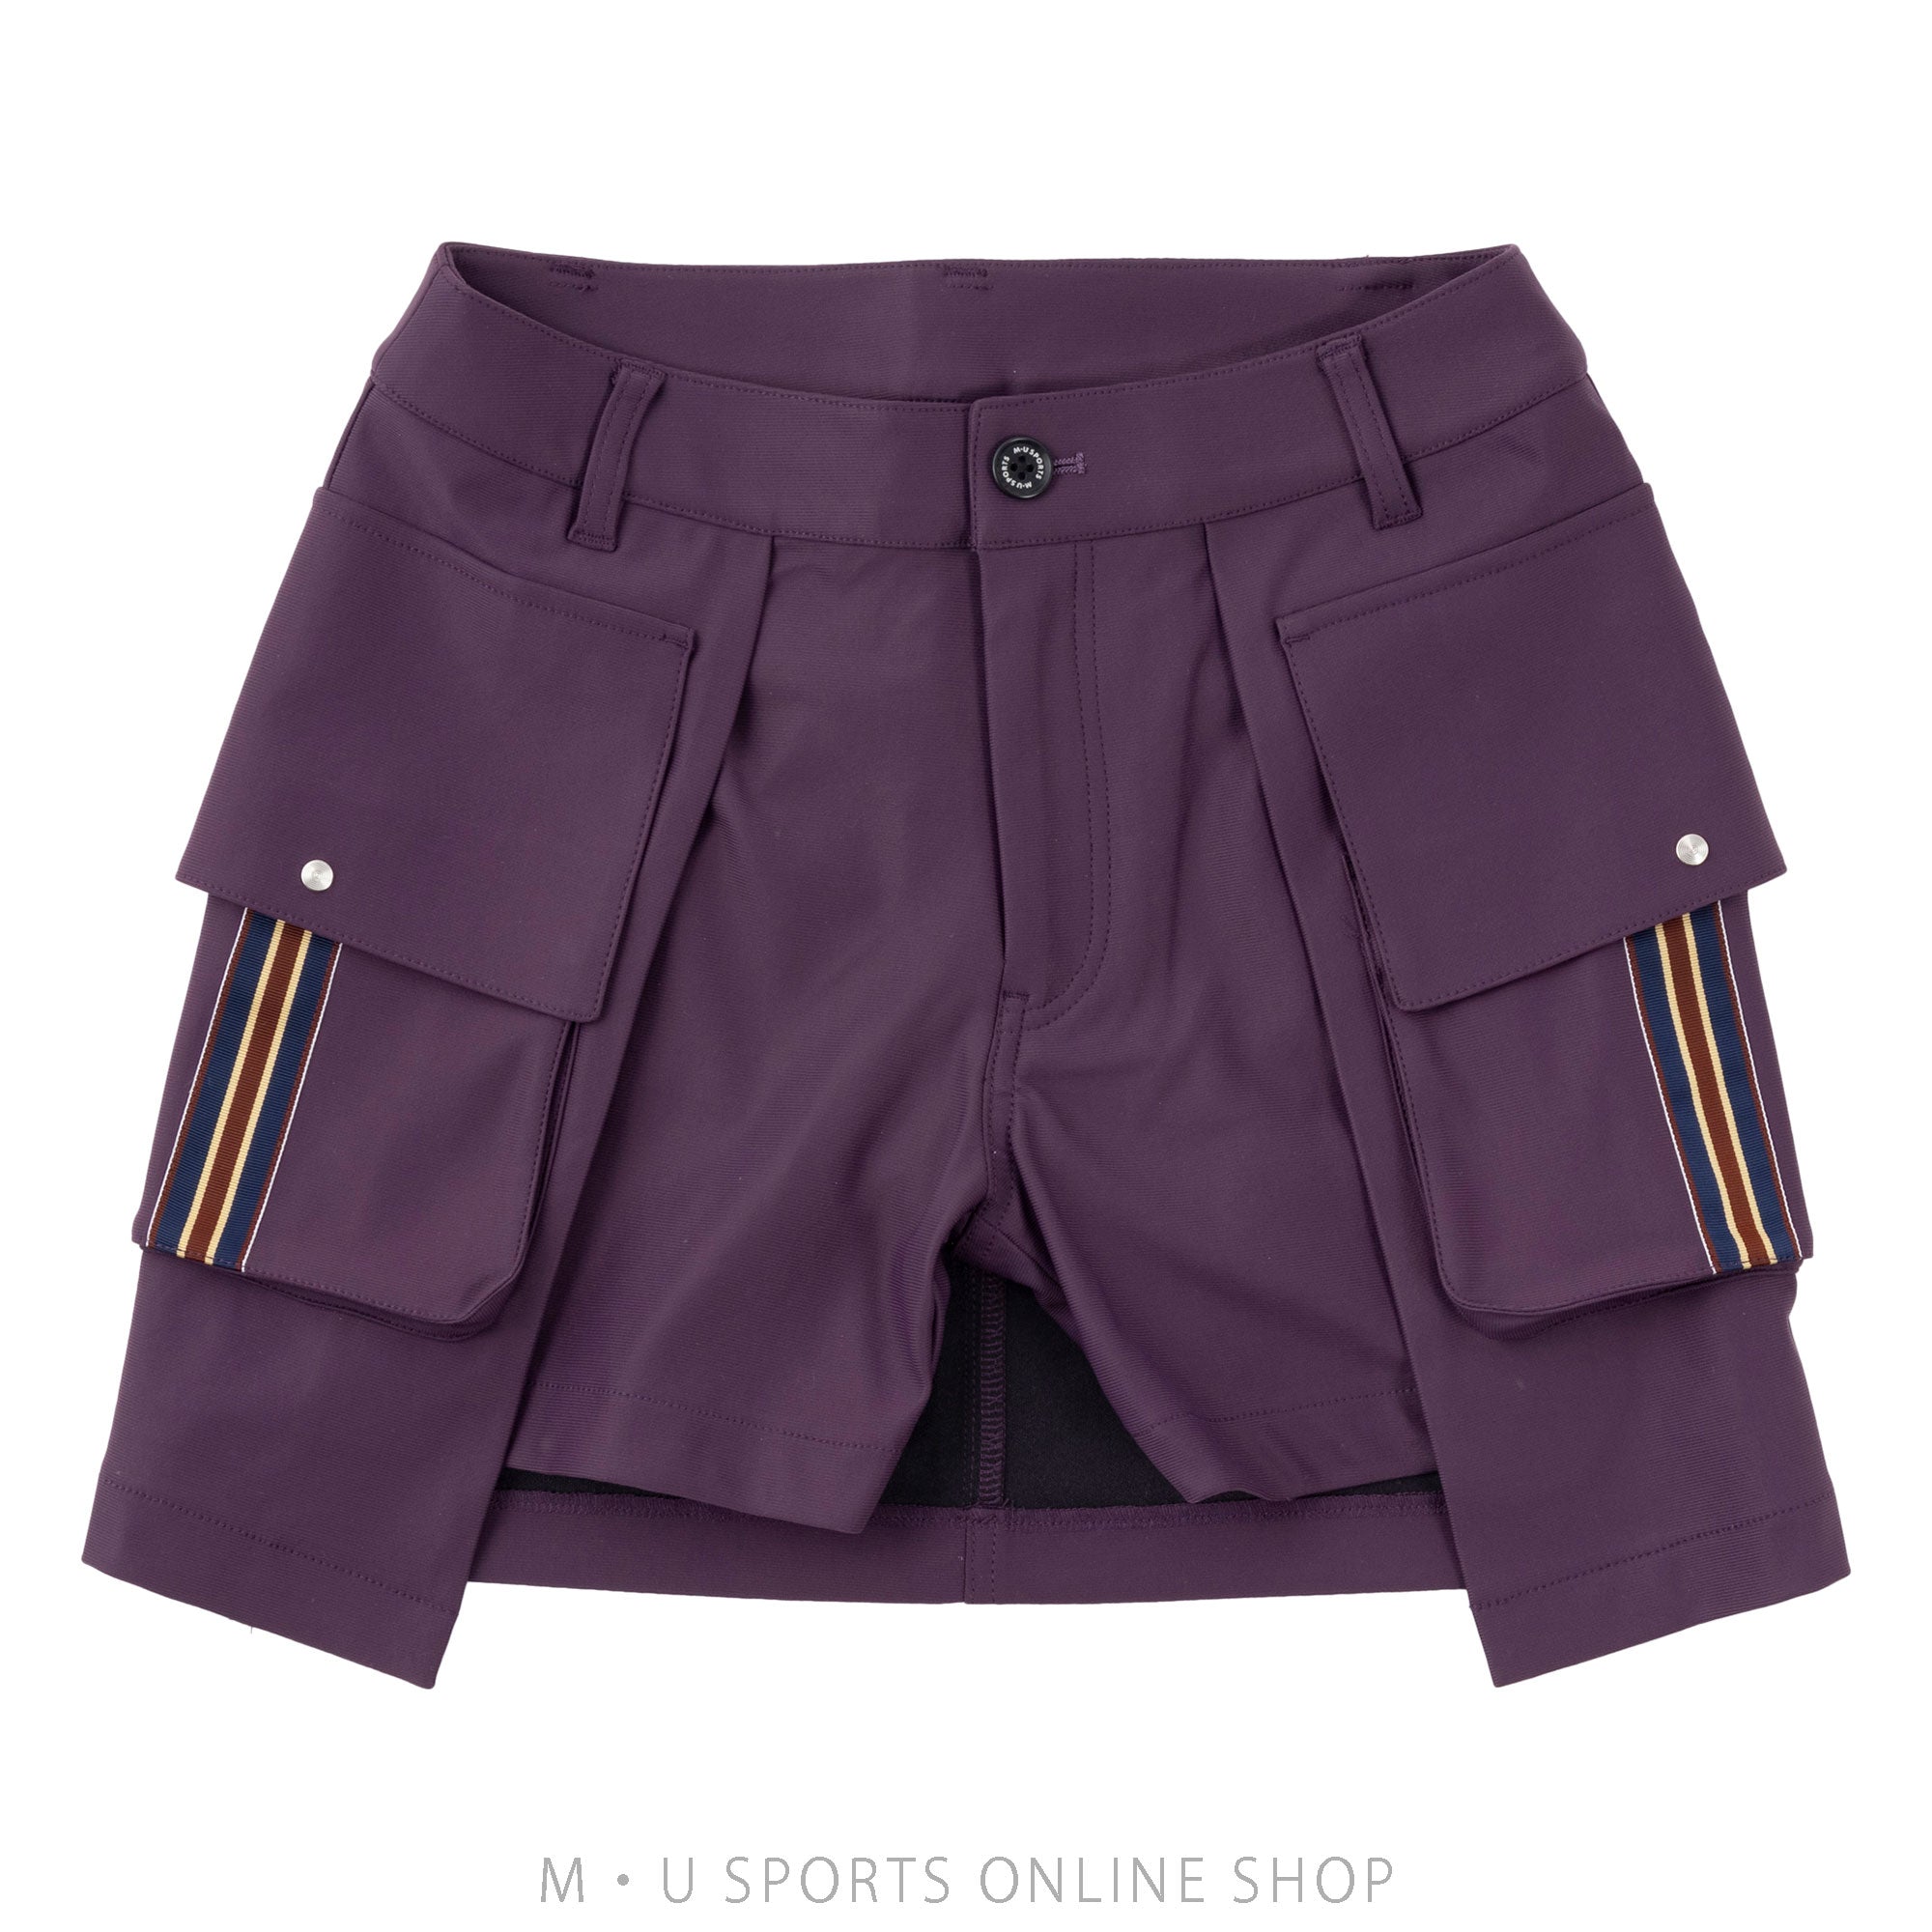 Wind shot skirt trike pants (701J7518)